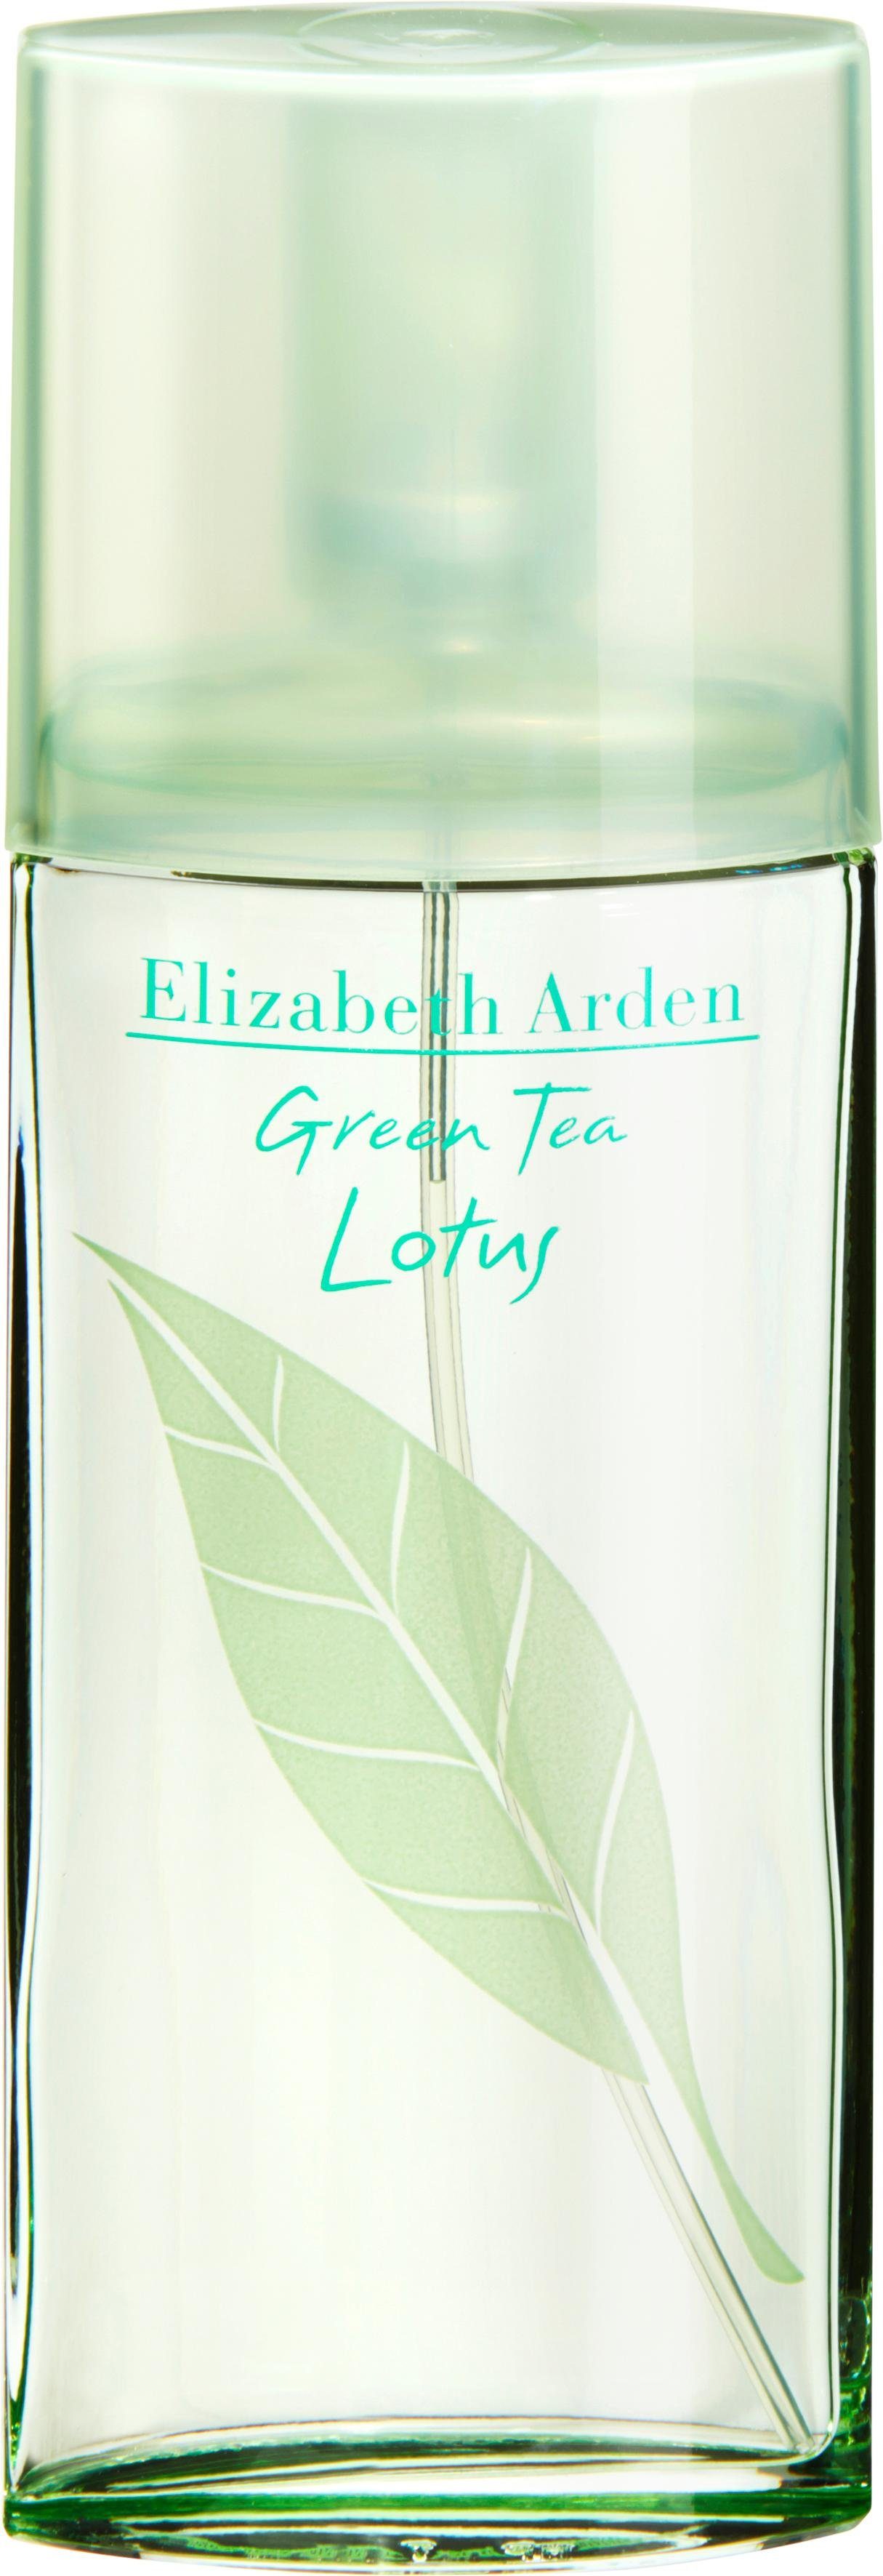 Elizabeth Arden Eau de Toilette Green Tea Lotus